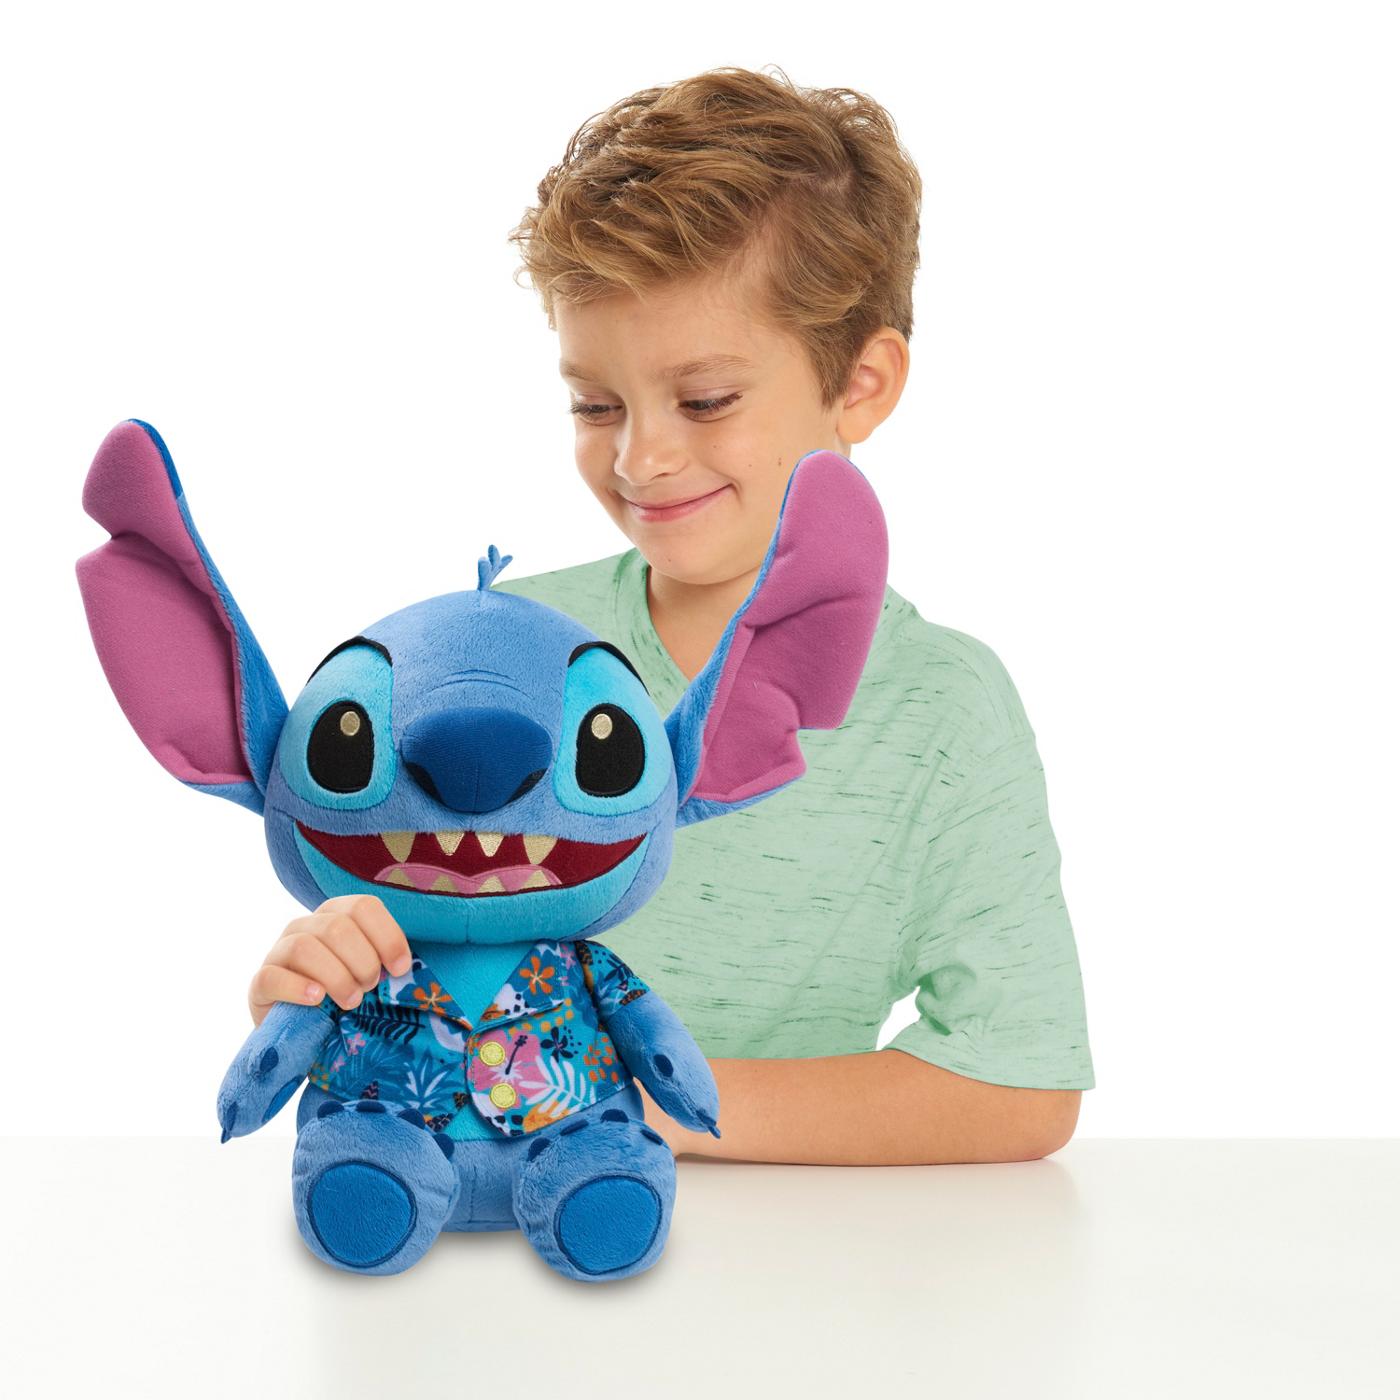 Plush giant Stitch Disney Store